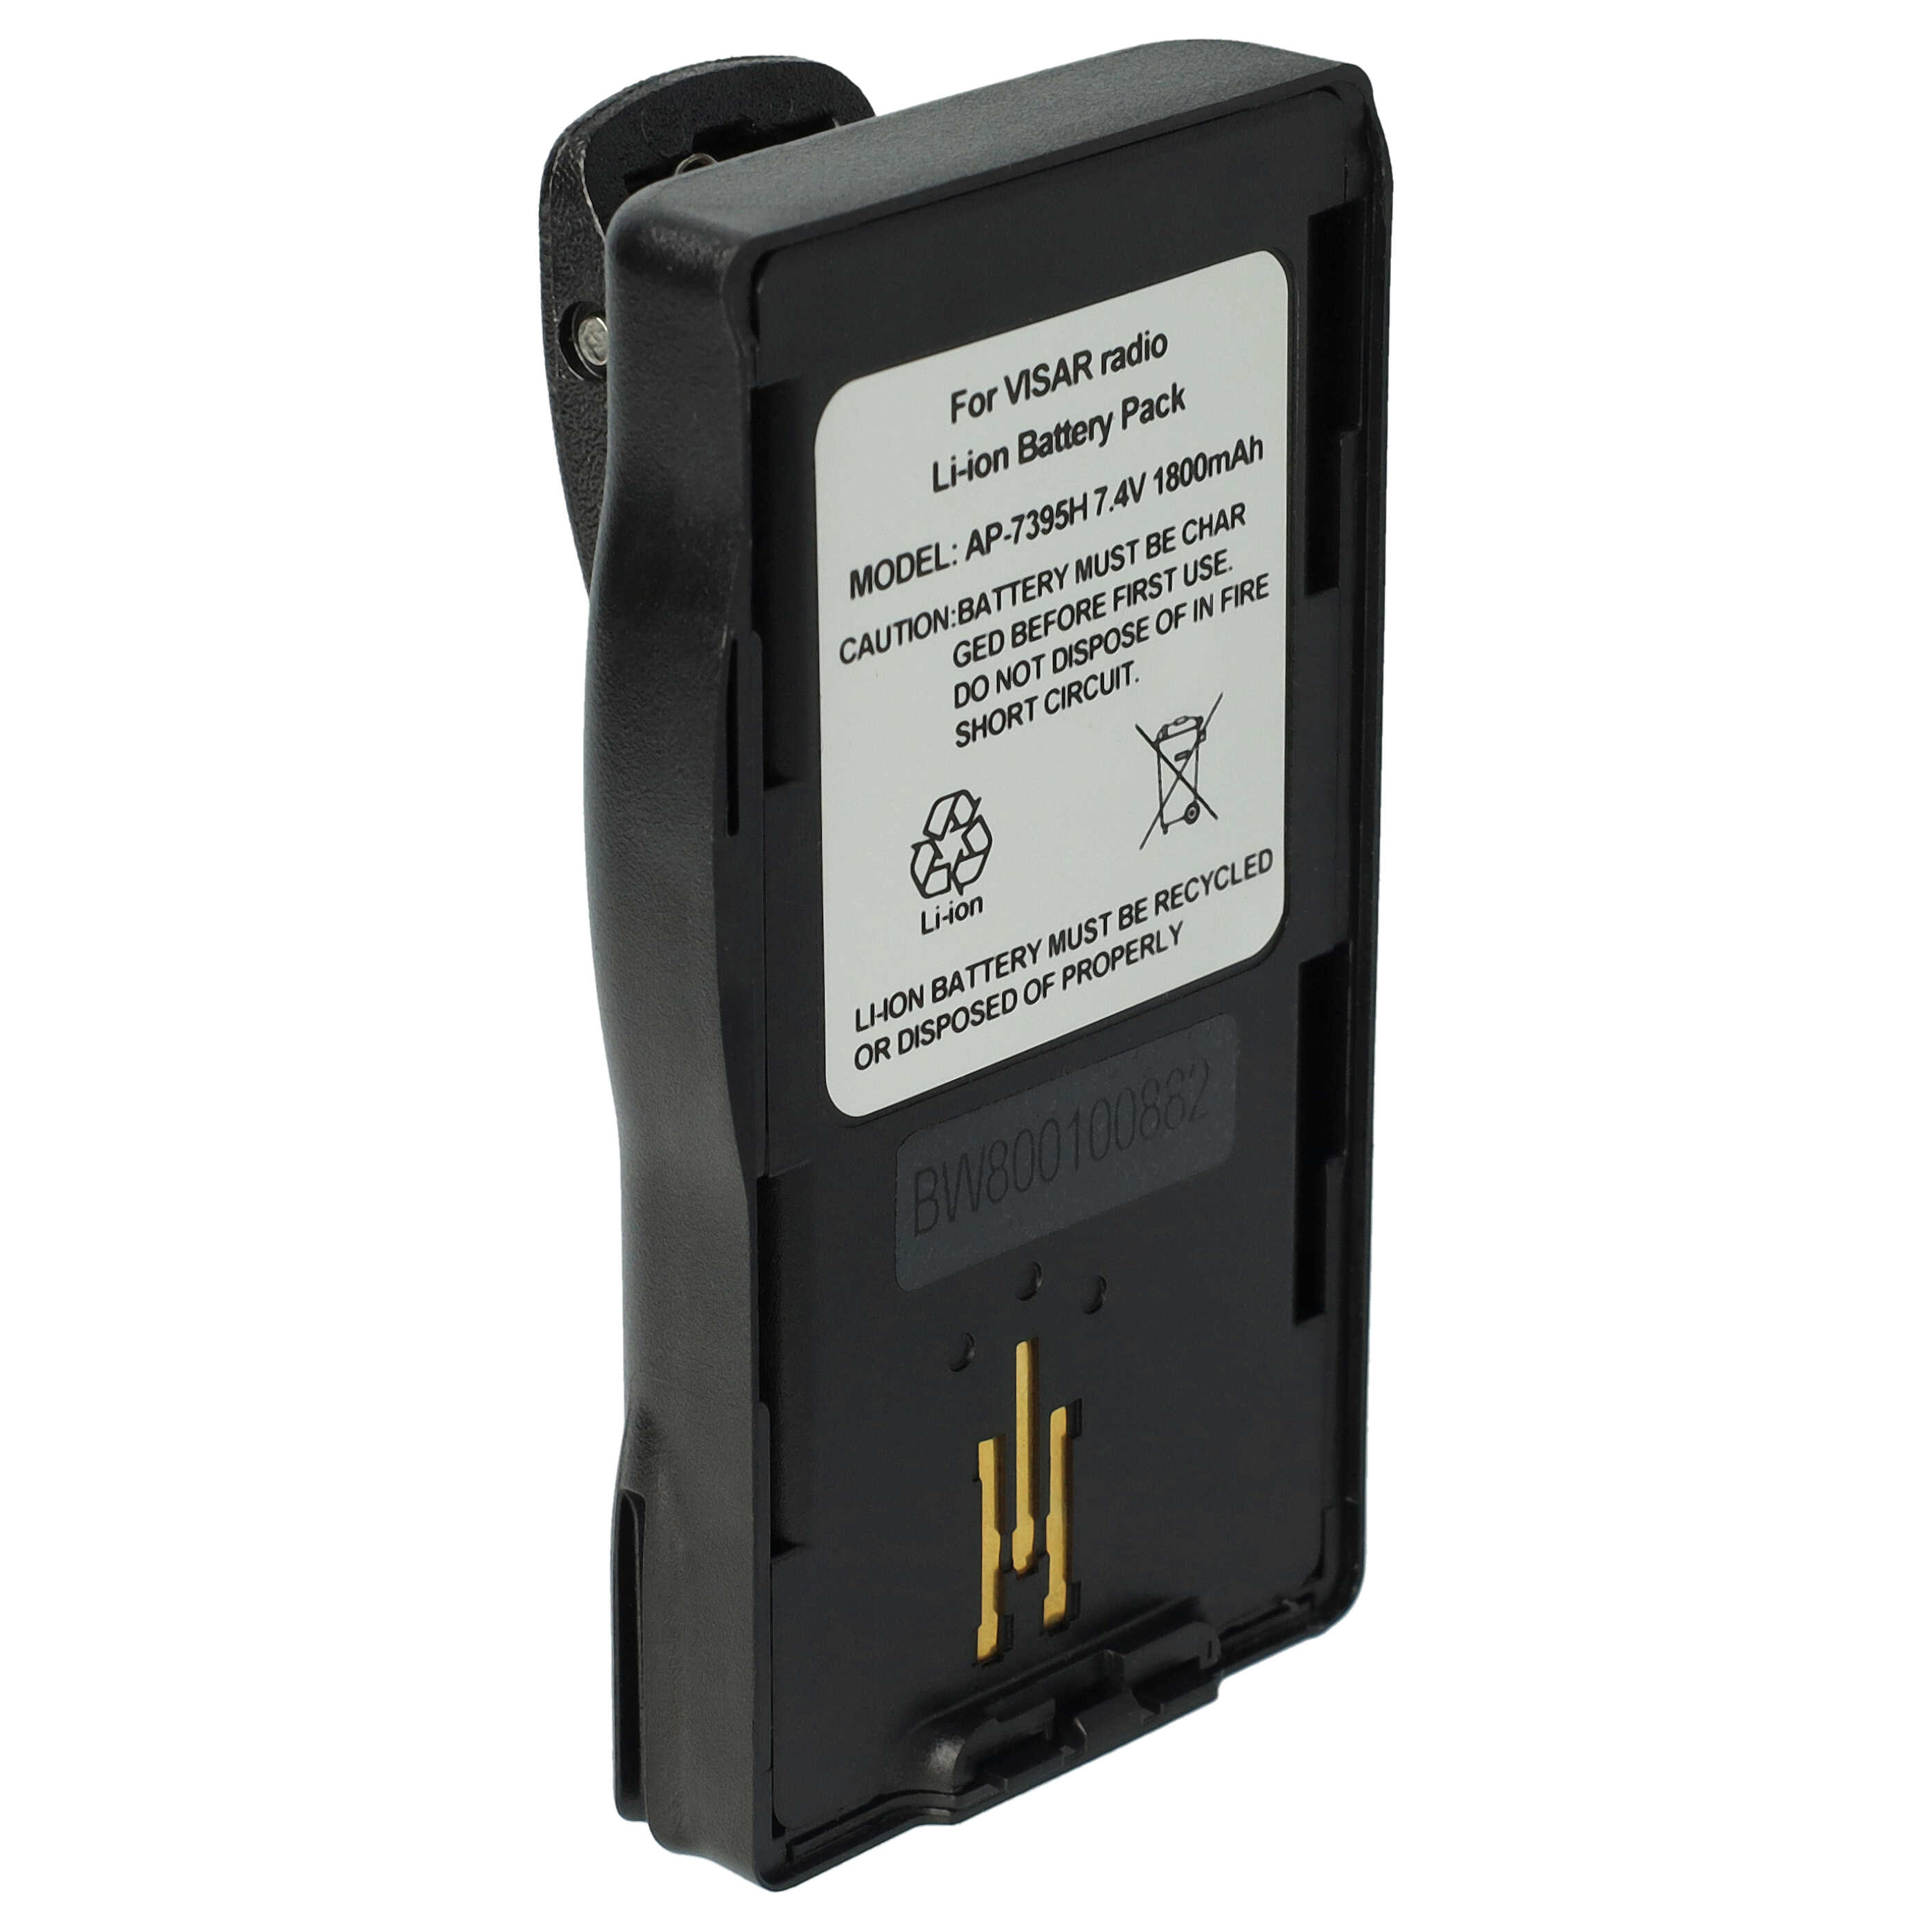 Batterie remplace Motorola NTN7396, NTN7395, NTN7394 pour radio talkie-walkie - 1800mAh 7,5V NiMH